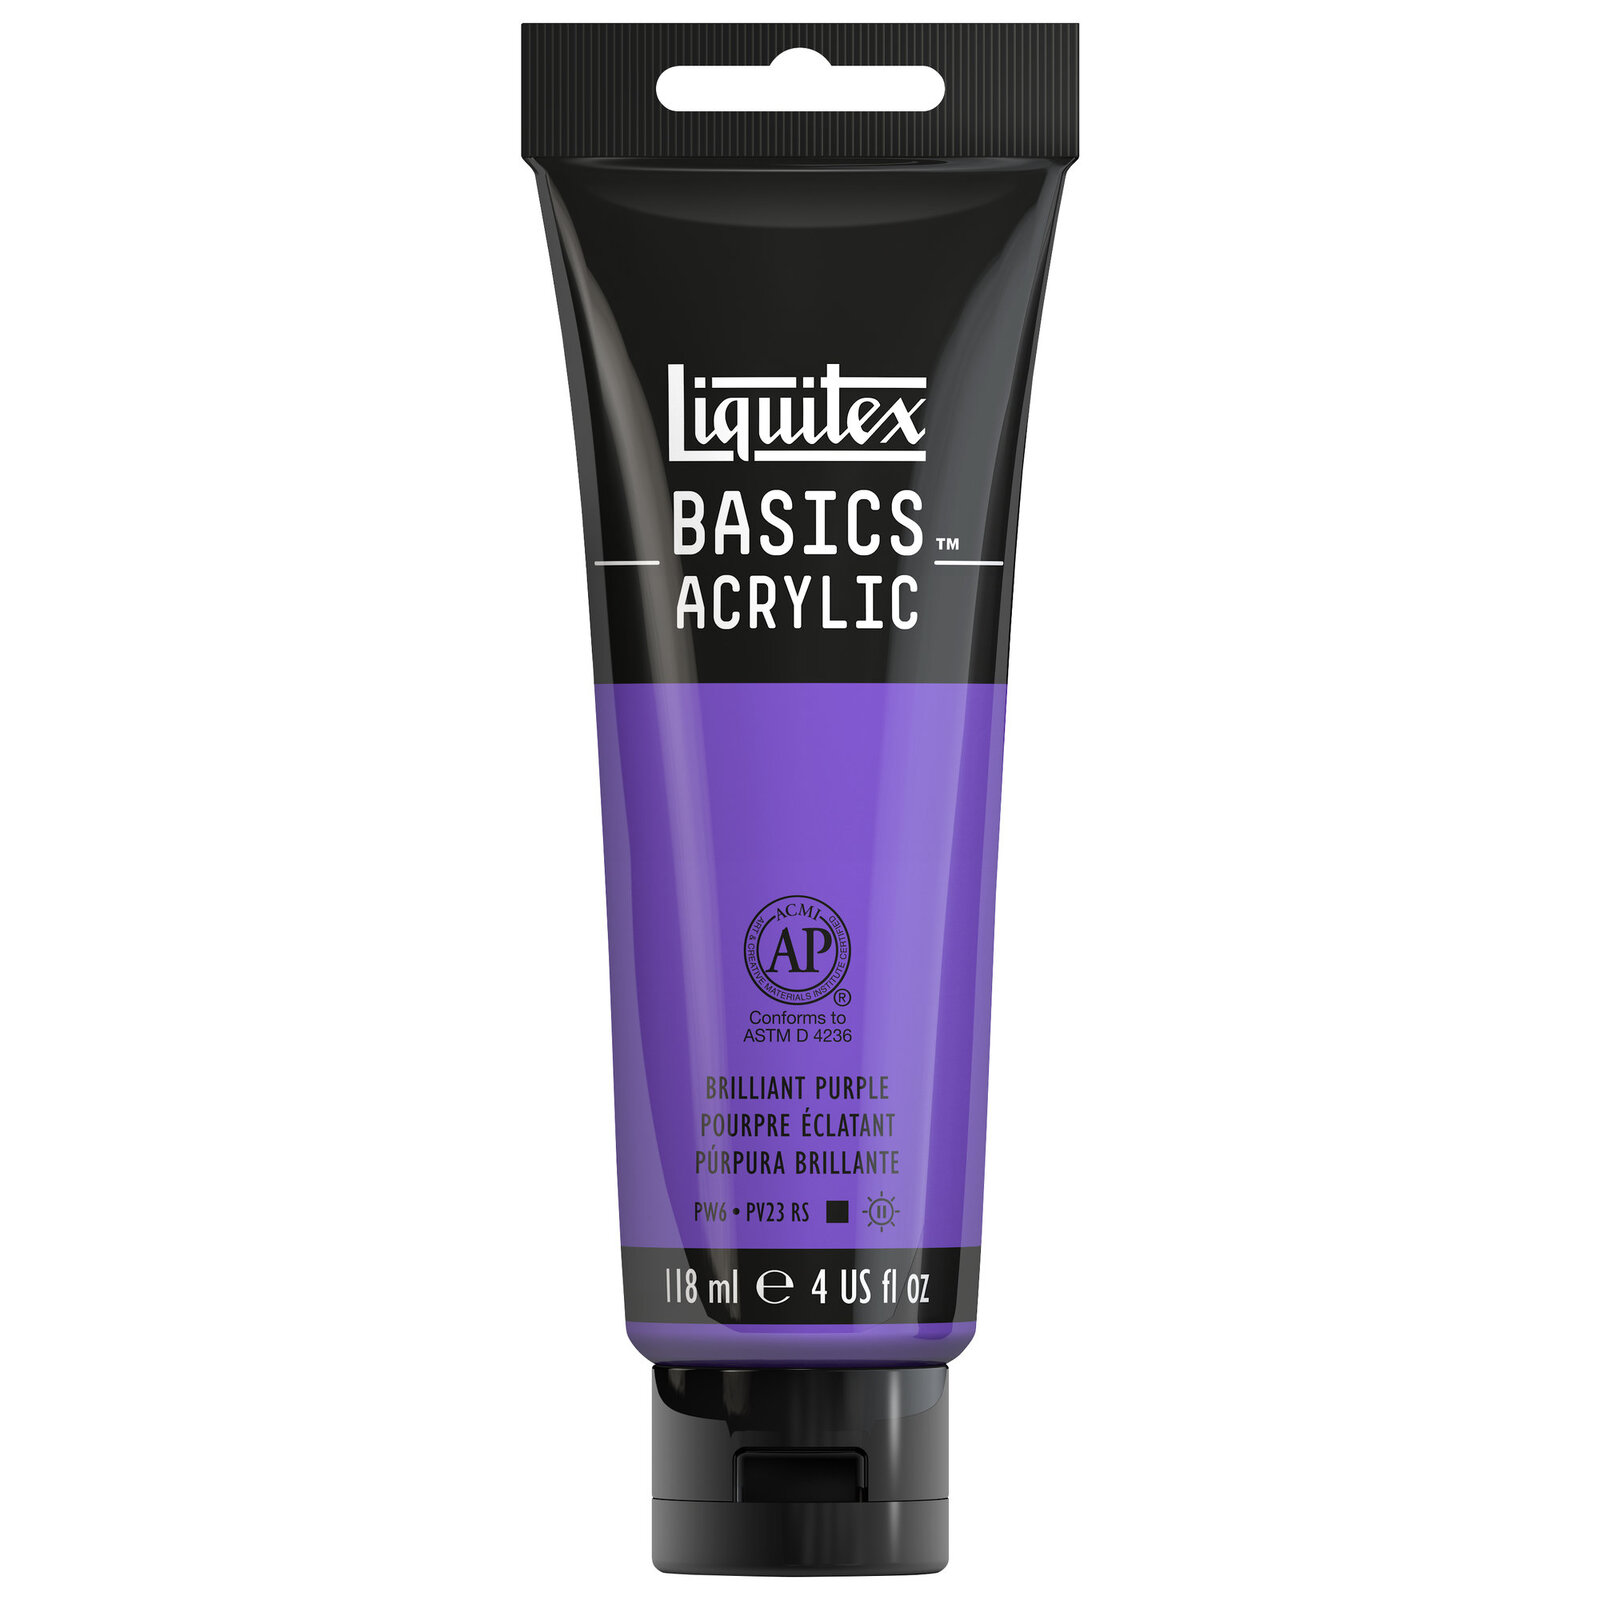 Liquitex Basics Acrylic - 118ml - Brilliant Purple